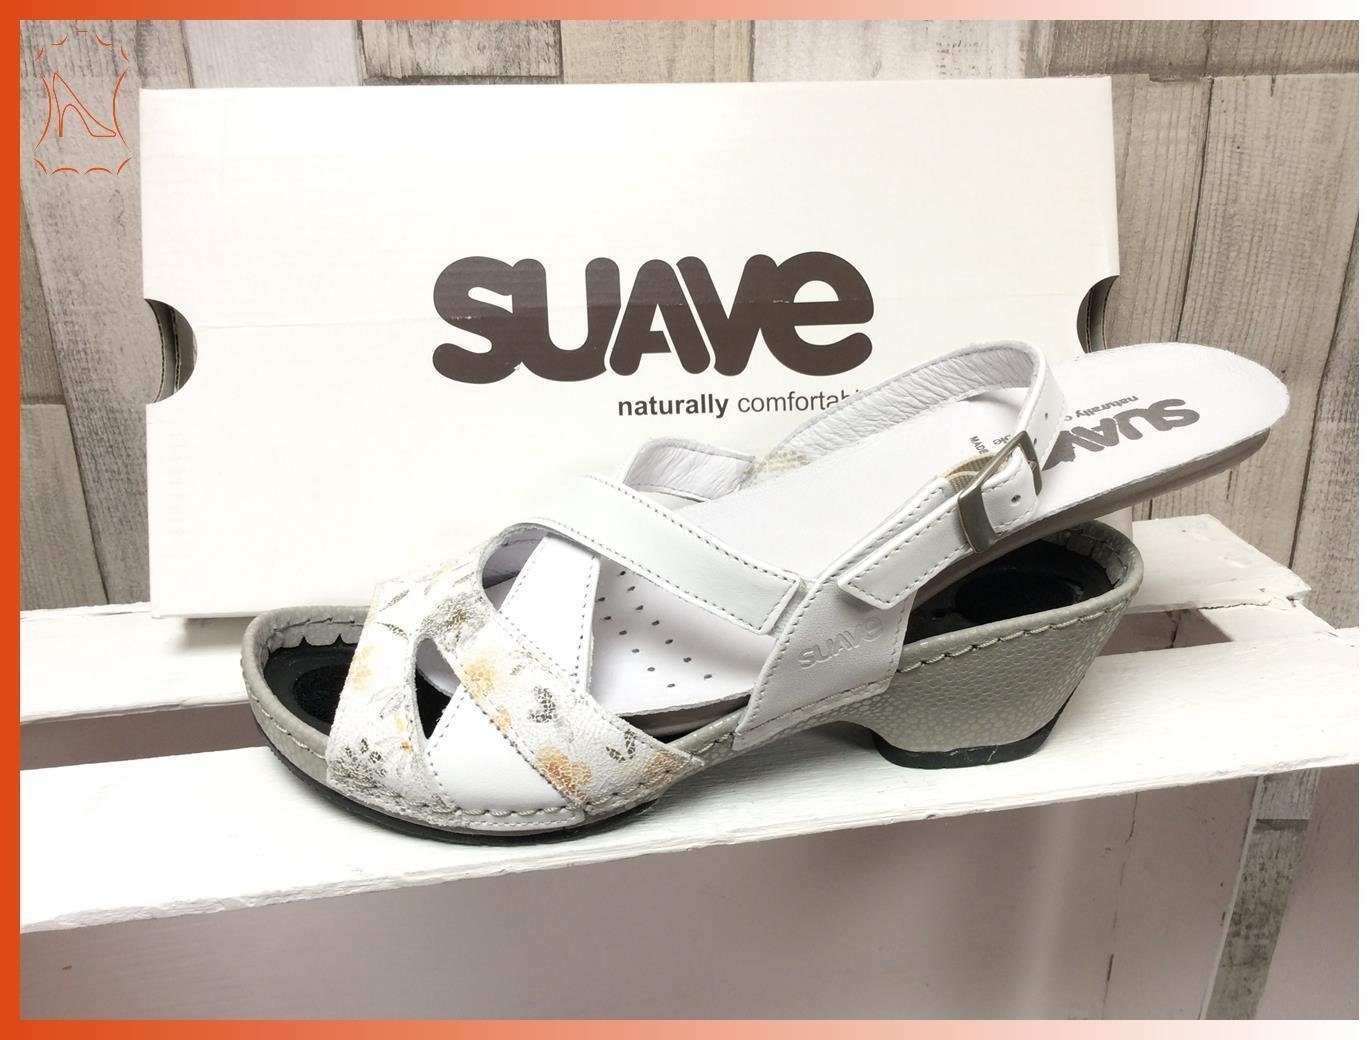 Suave suave Damen Sandale 3,5 Innensohle, herausnehmbare Absat cm weiß-grau, Sandalette